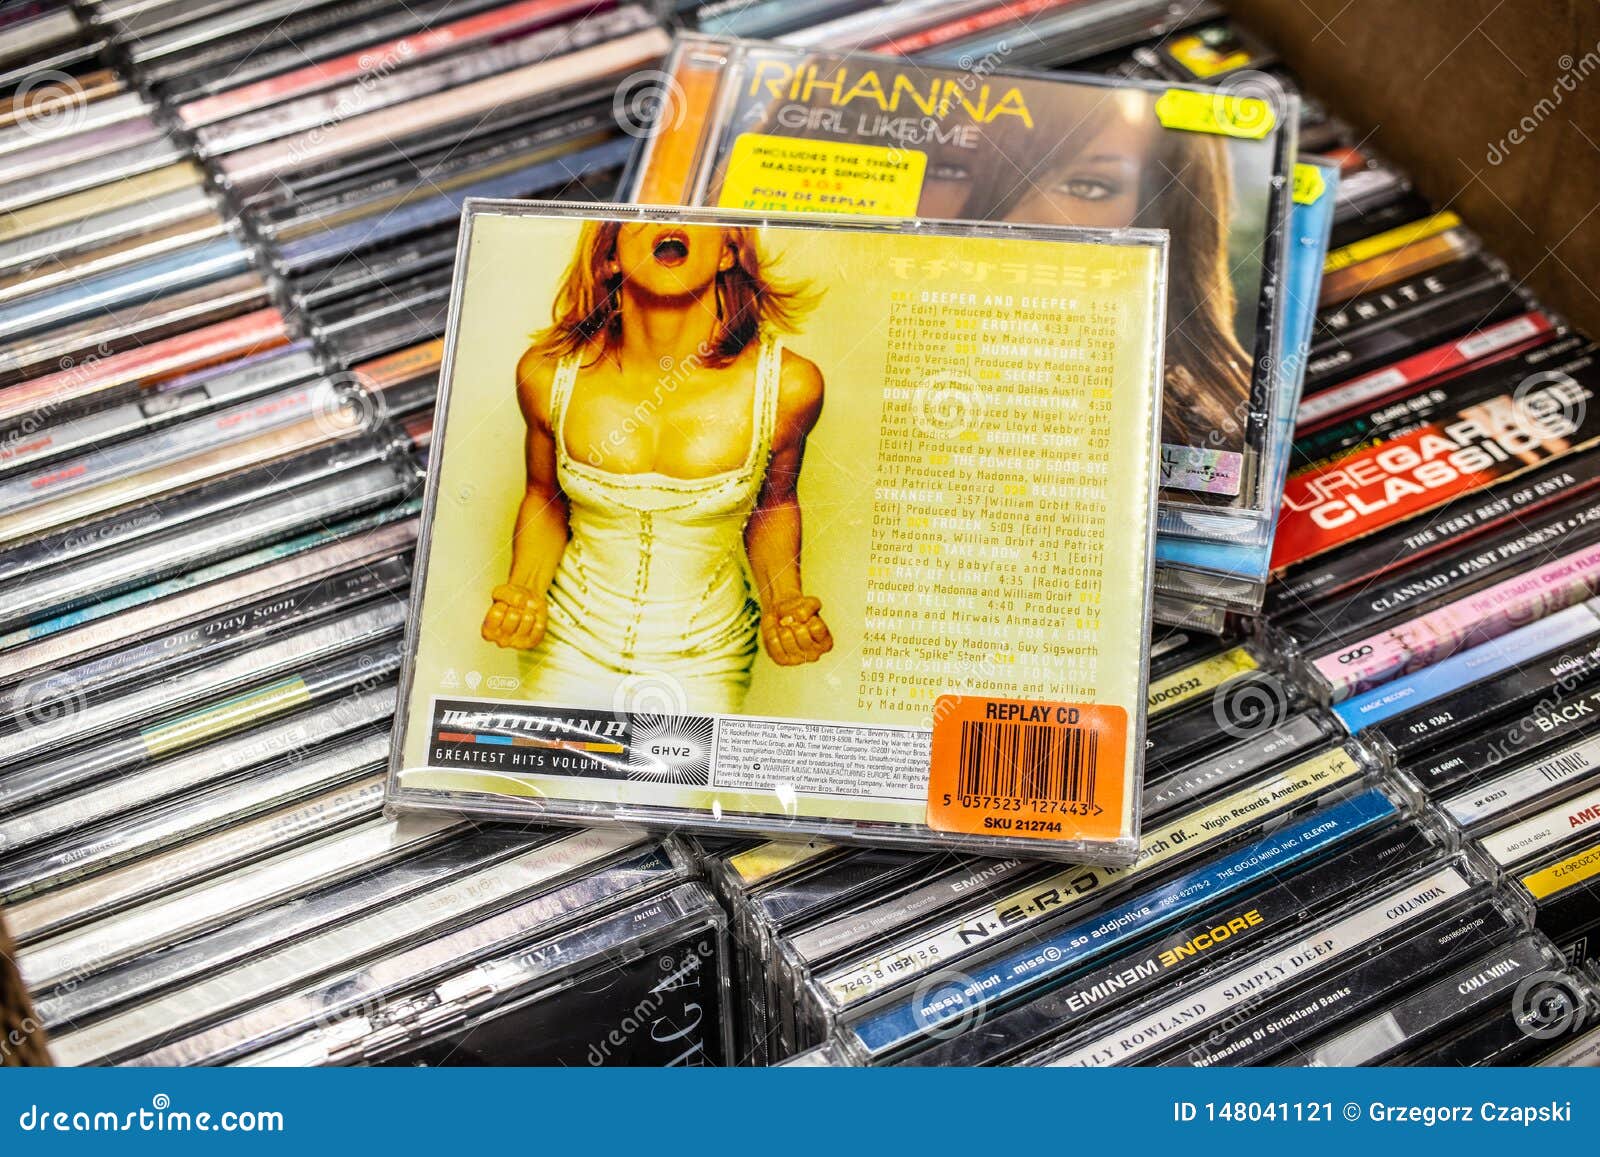 Madonna CD Album Greatest Hits Volume 2 GHV2 on Display for Sale, Famous  American Musician and Singer, Foto editorial - Imagen de estallido,  cubierta: 148041121